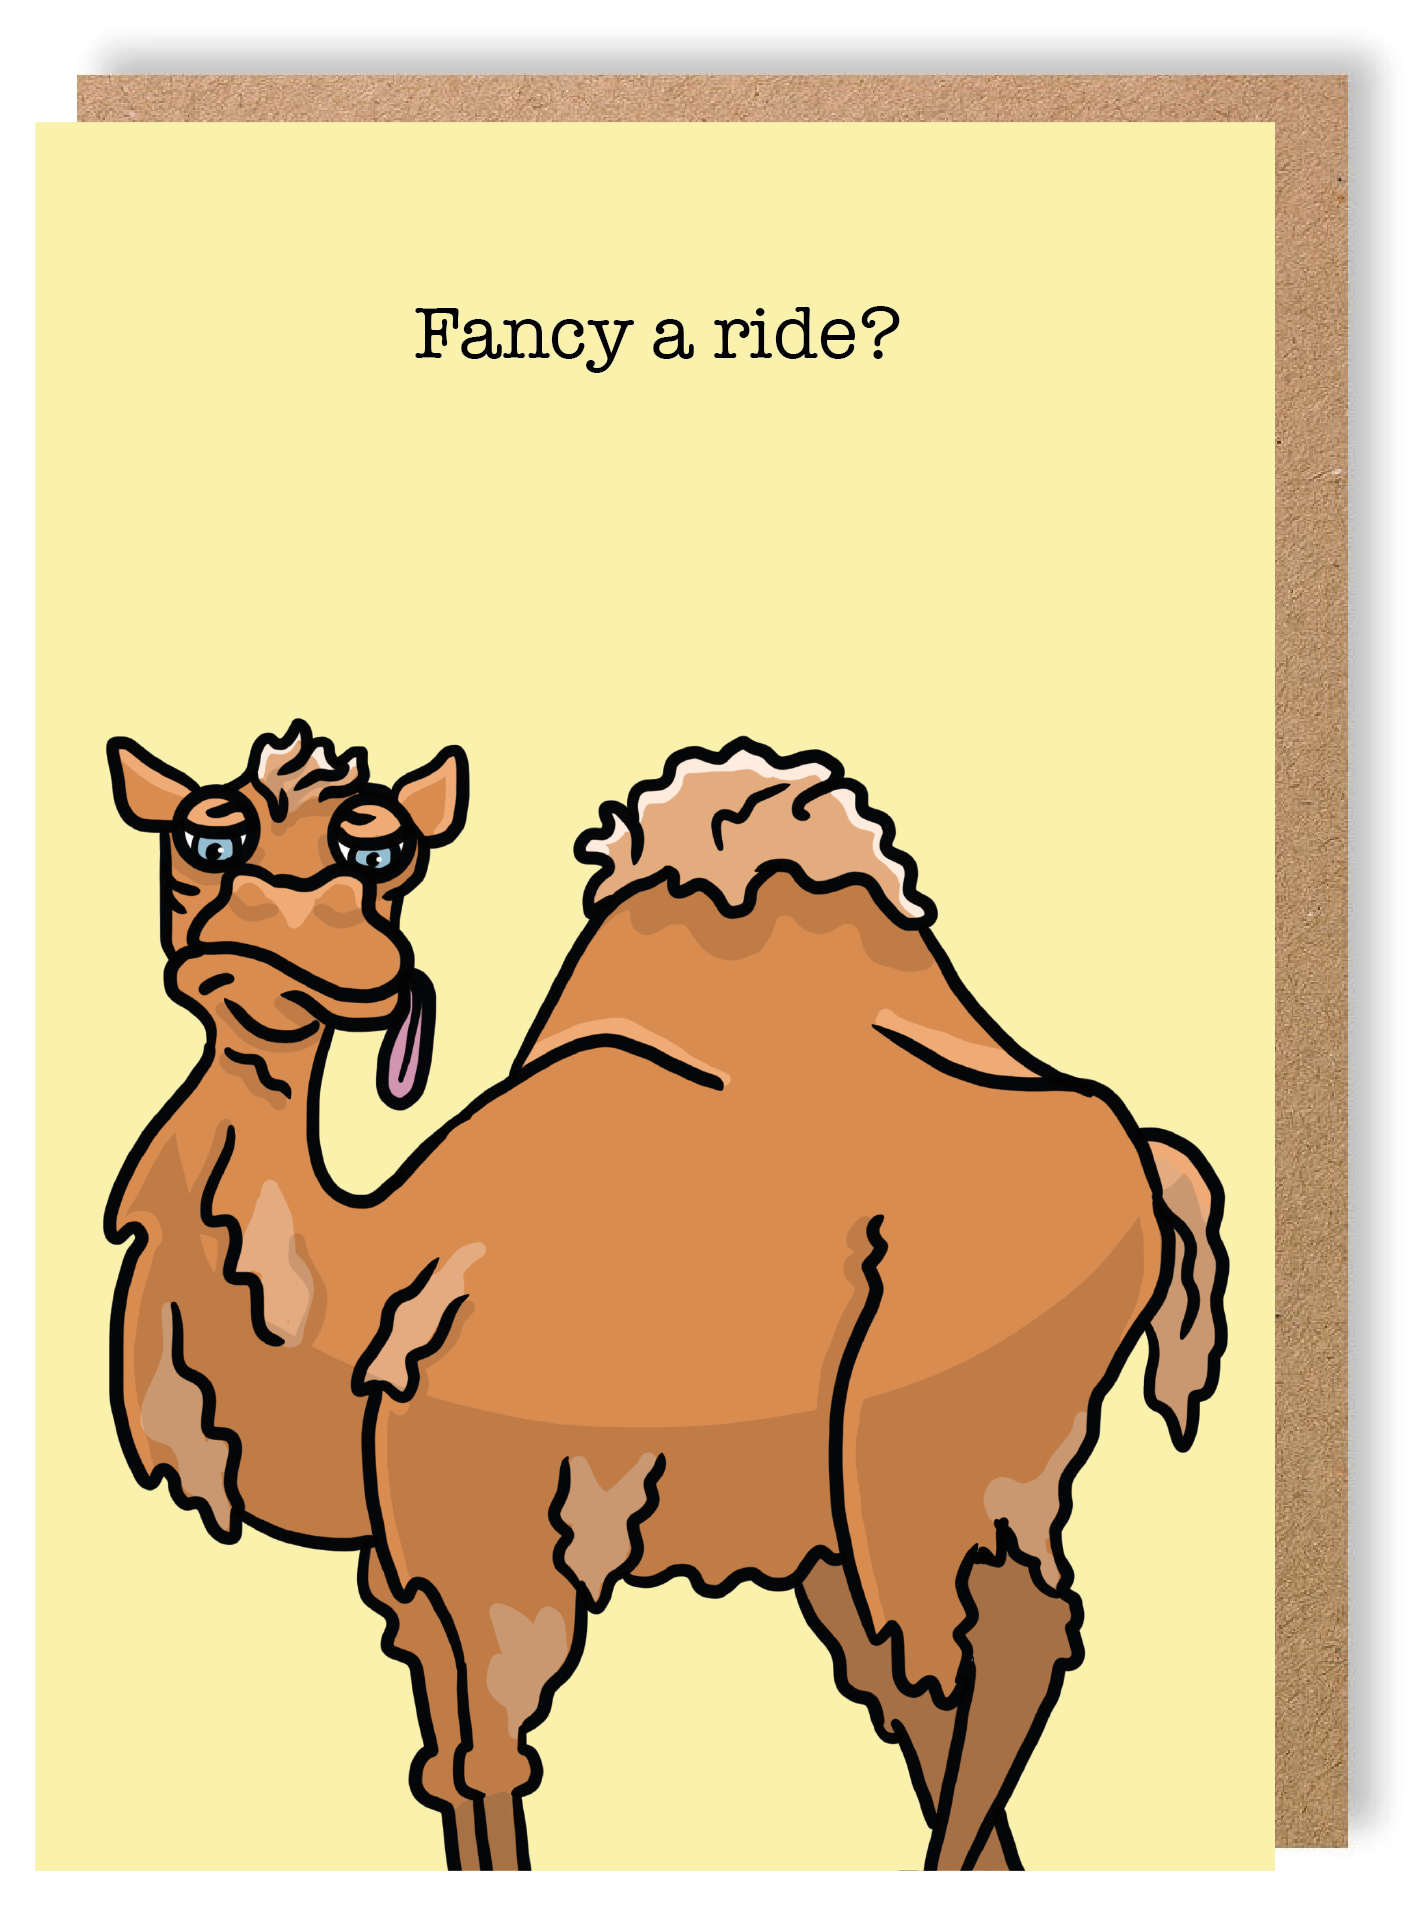 Fancy a ride? - Camel - Greetings Card - LukeHorton Art